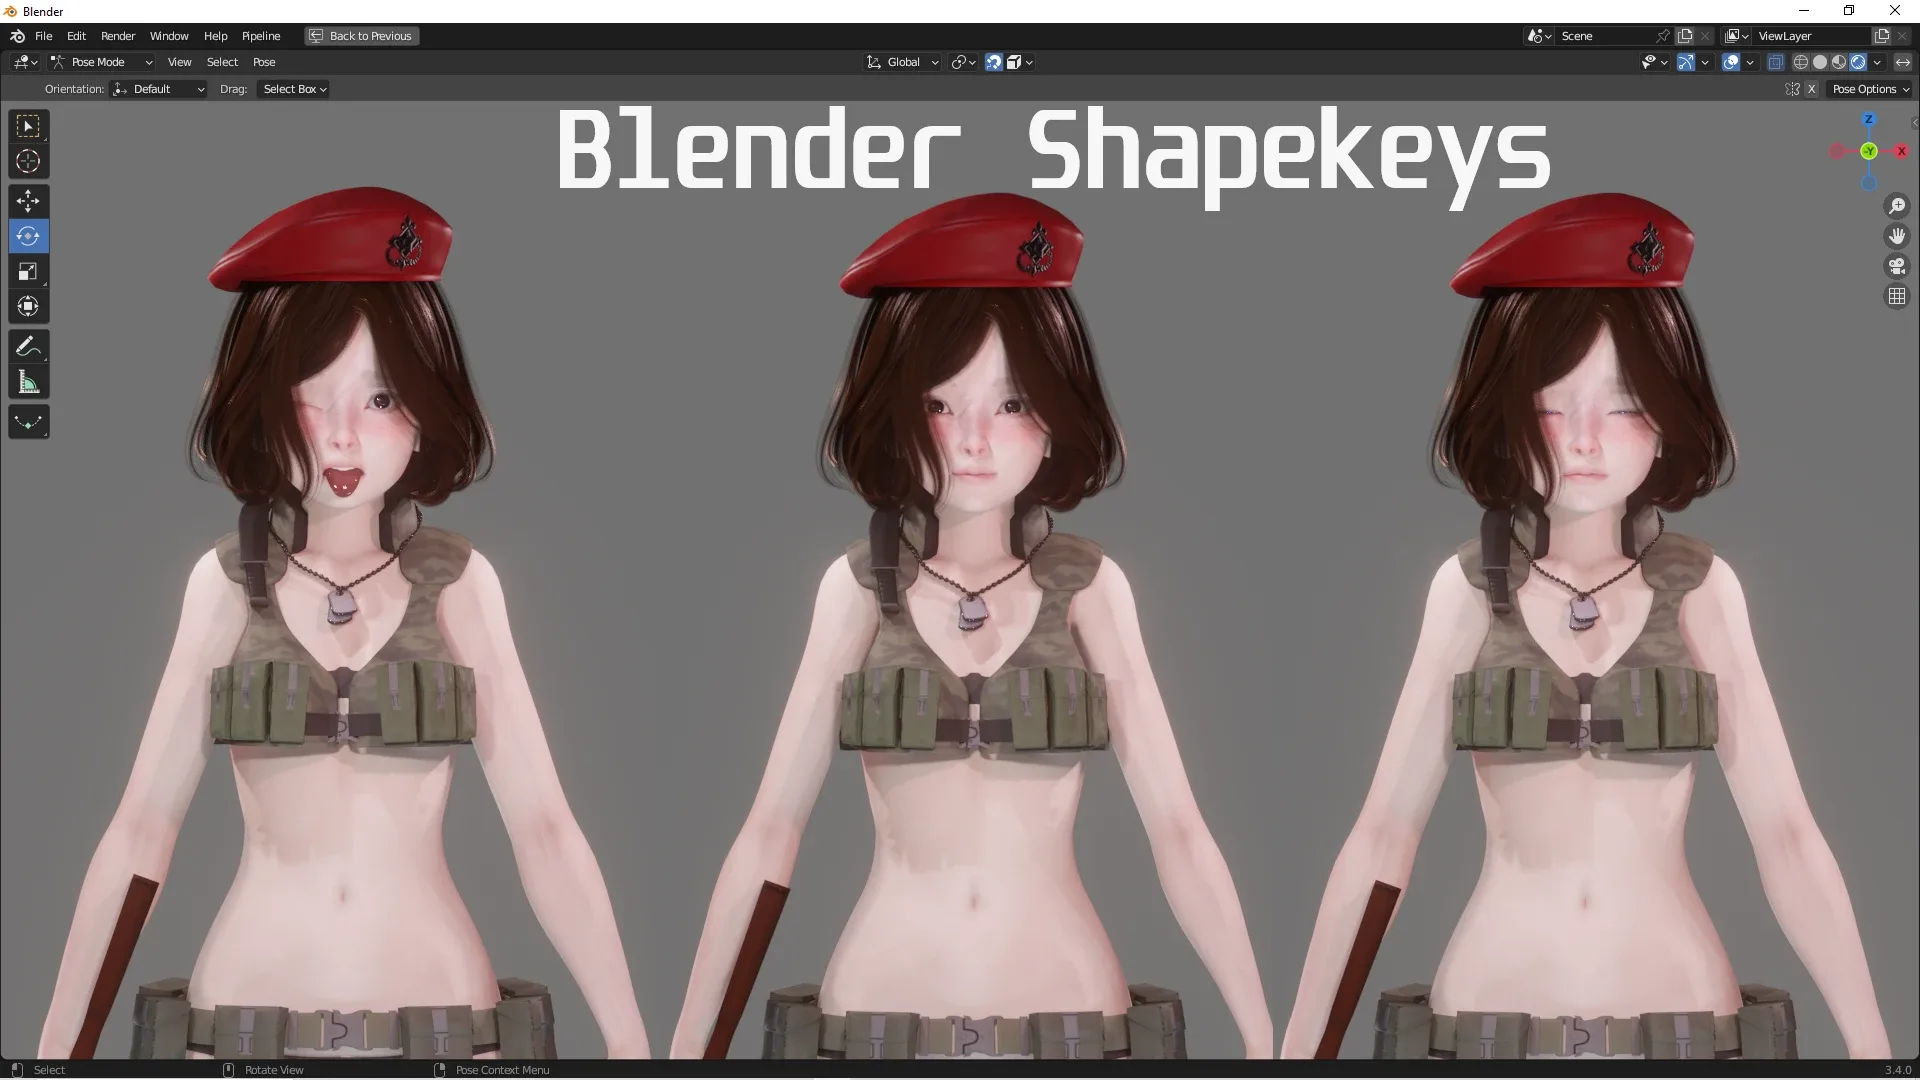 Soldier Agent Girl - Realistic Female Character - Blender Eevee